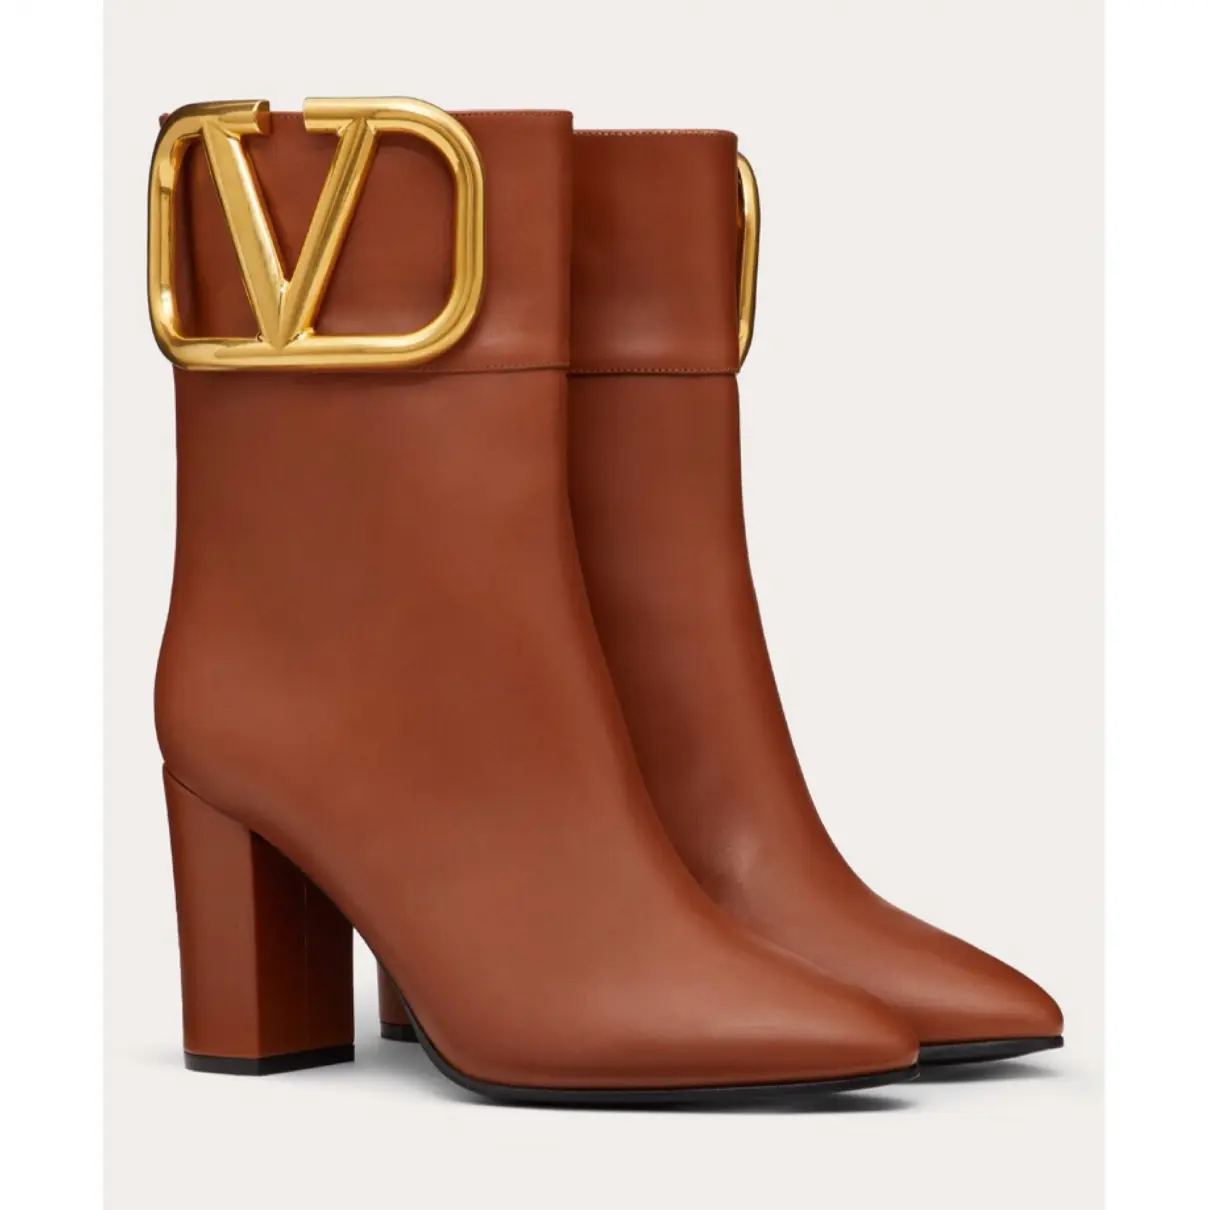 Buy Valentino Garavani VLogo leather ankle boots online